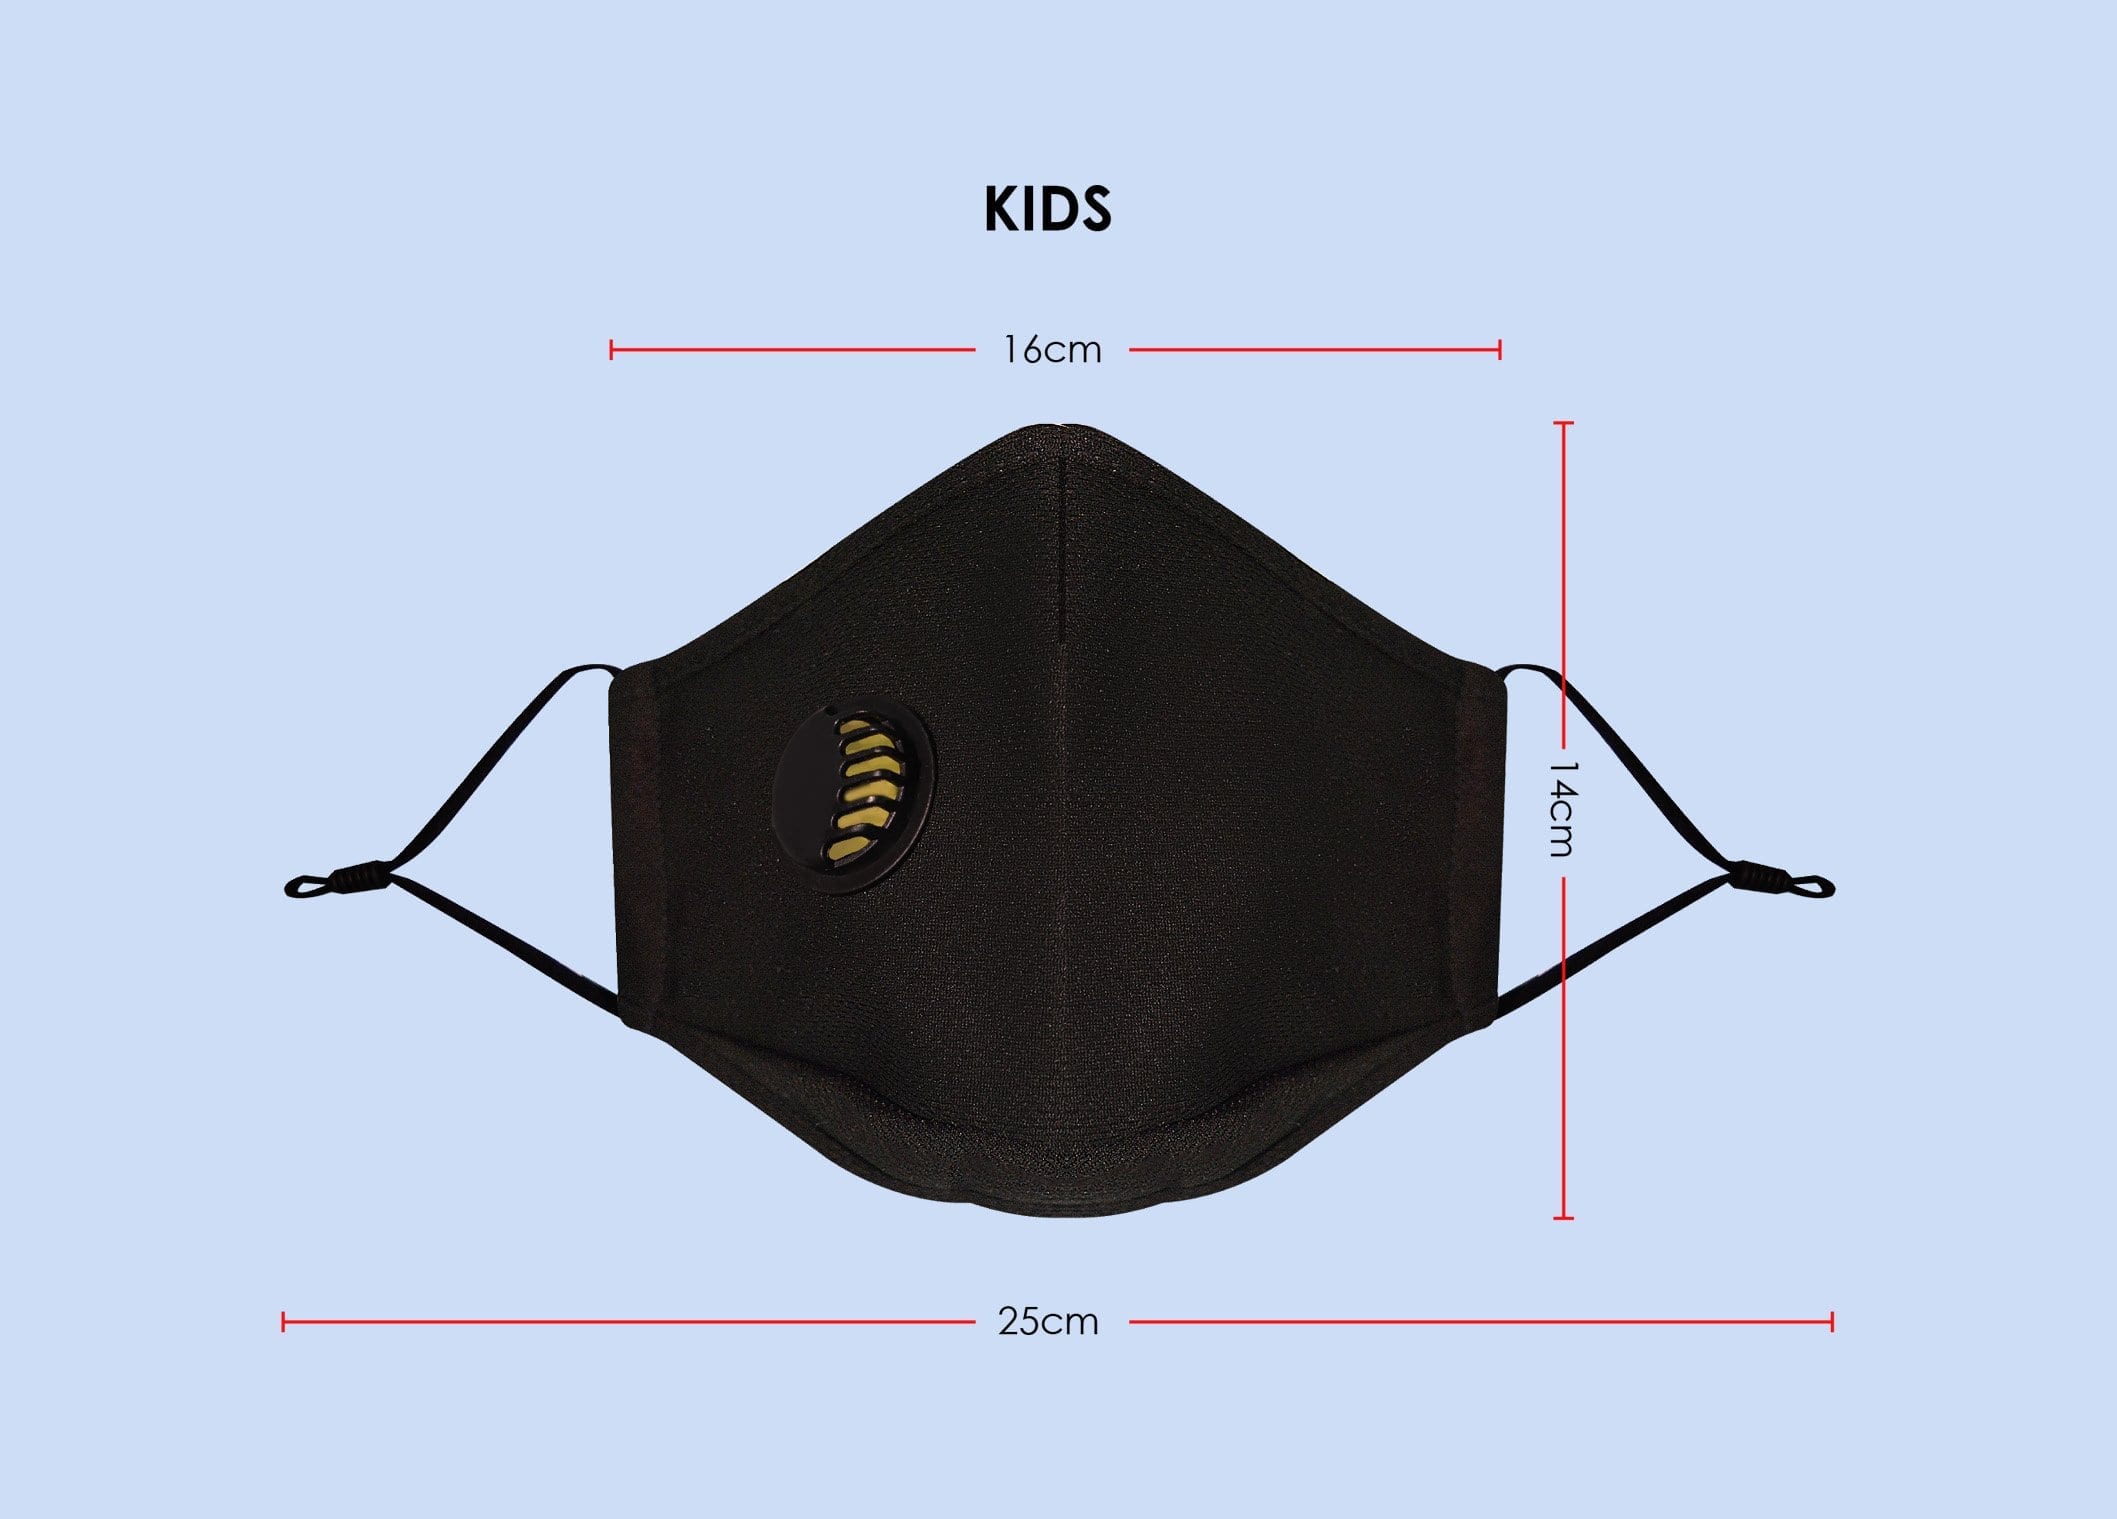 Air Mask Kids Size Measurement